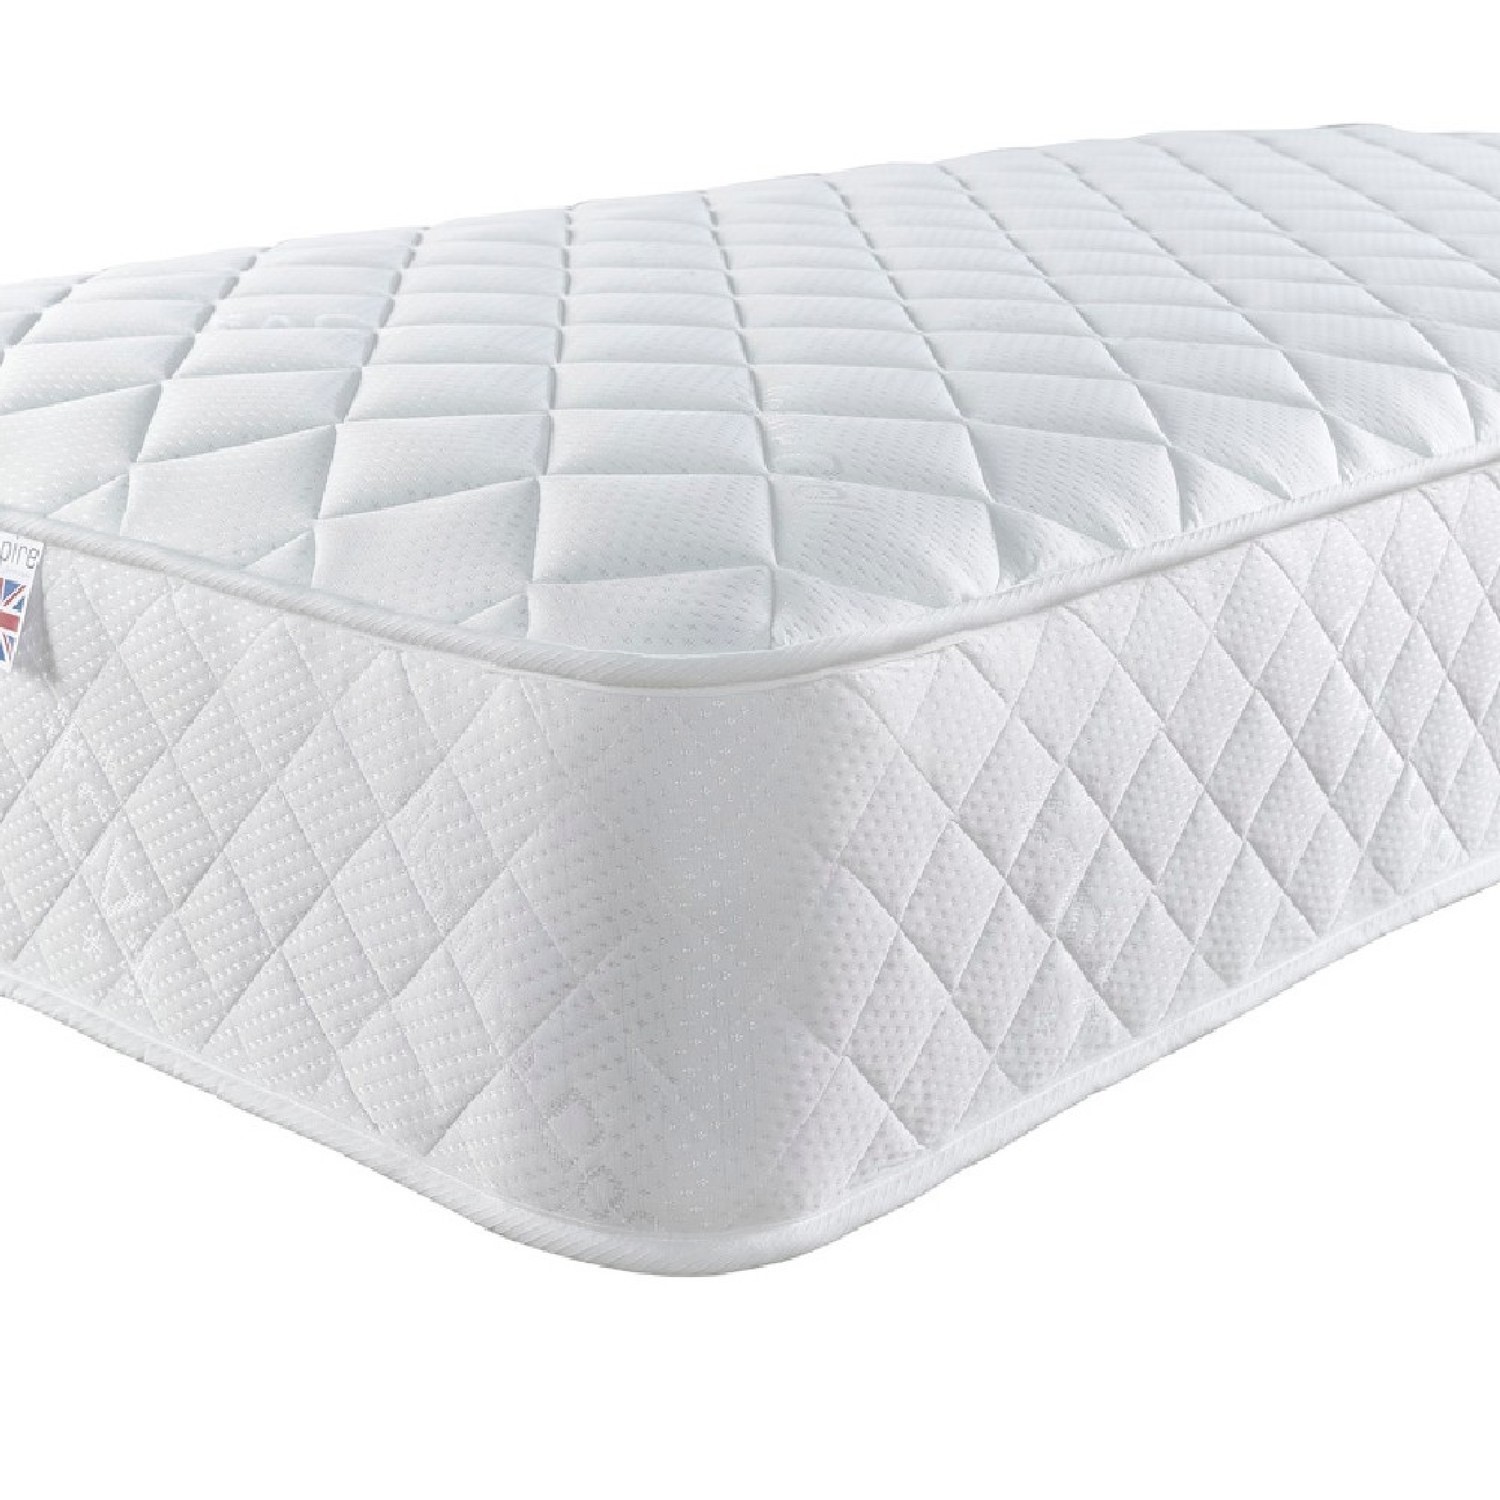 Aspire furniture comfort eco foam free mattress - single